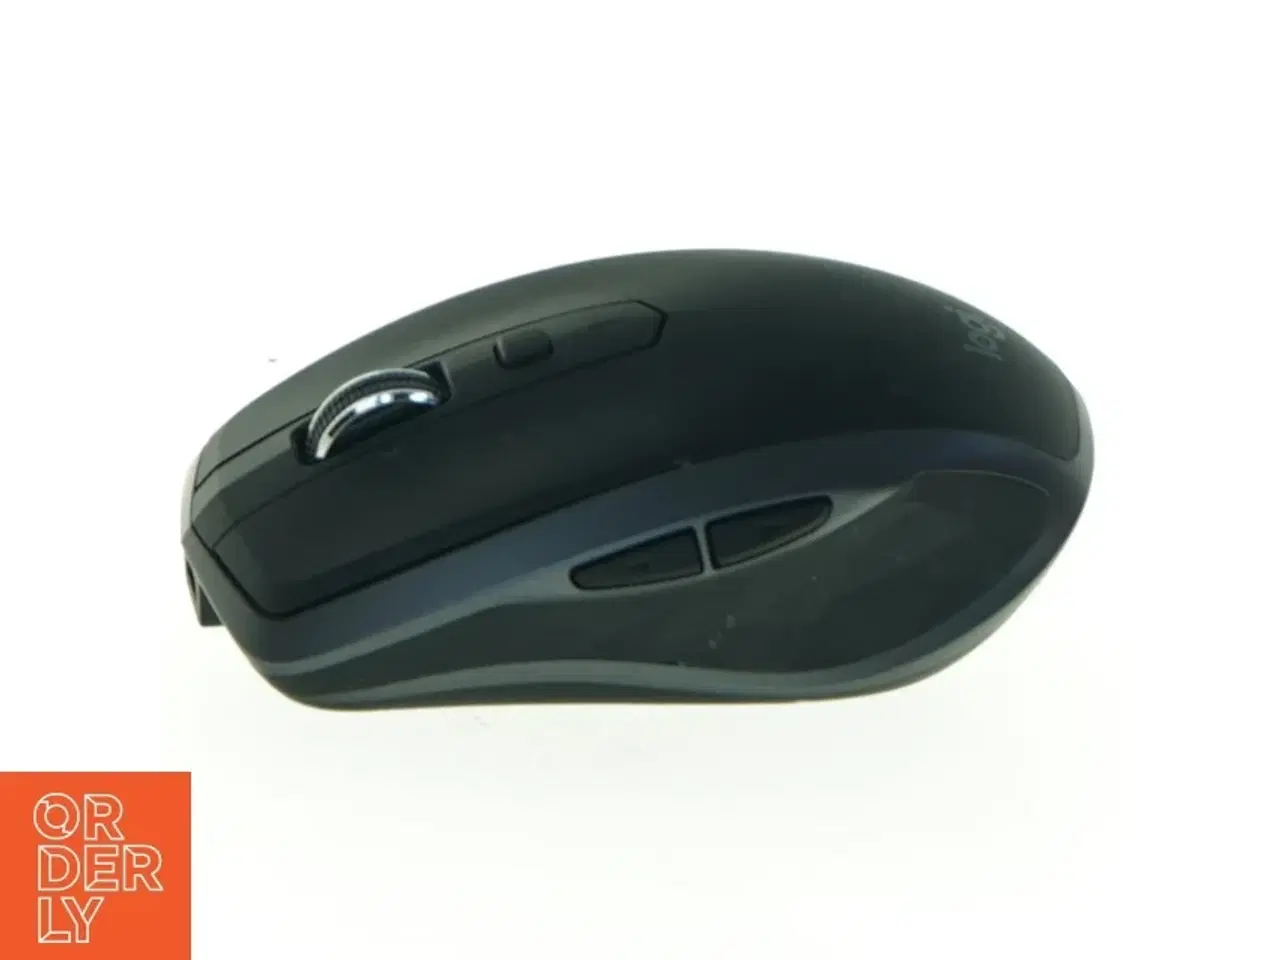 Billede 3 - Logitech trådløs mus fra Logi (str. 10 x 6 cm)